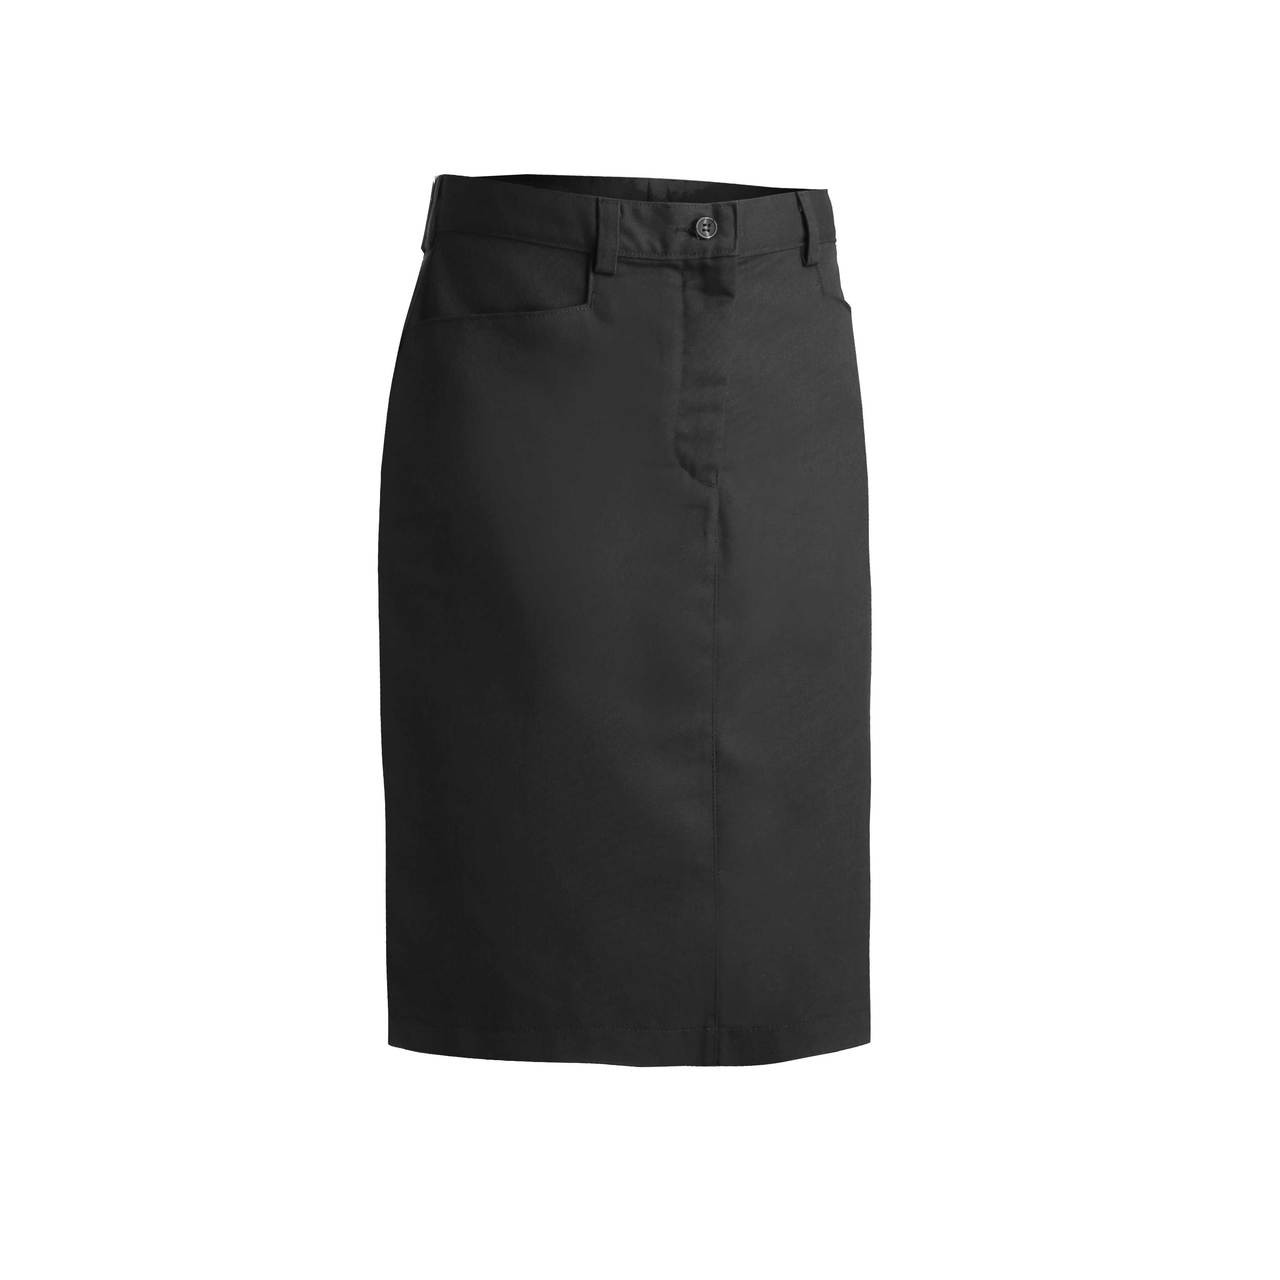 Uniform Skirt in 2 Lengths | Restaurant Uniform Skirts